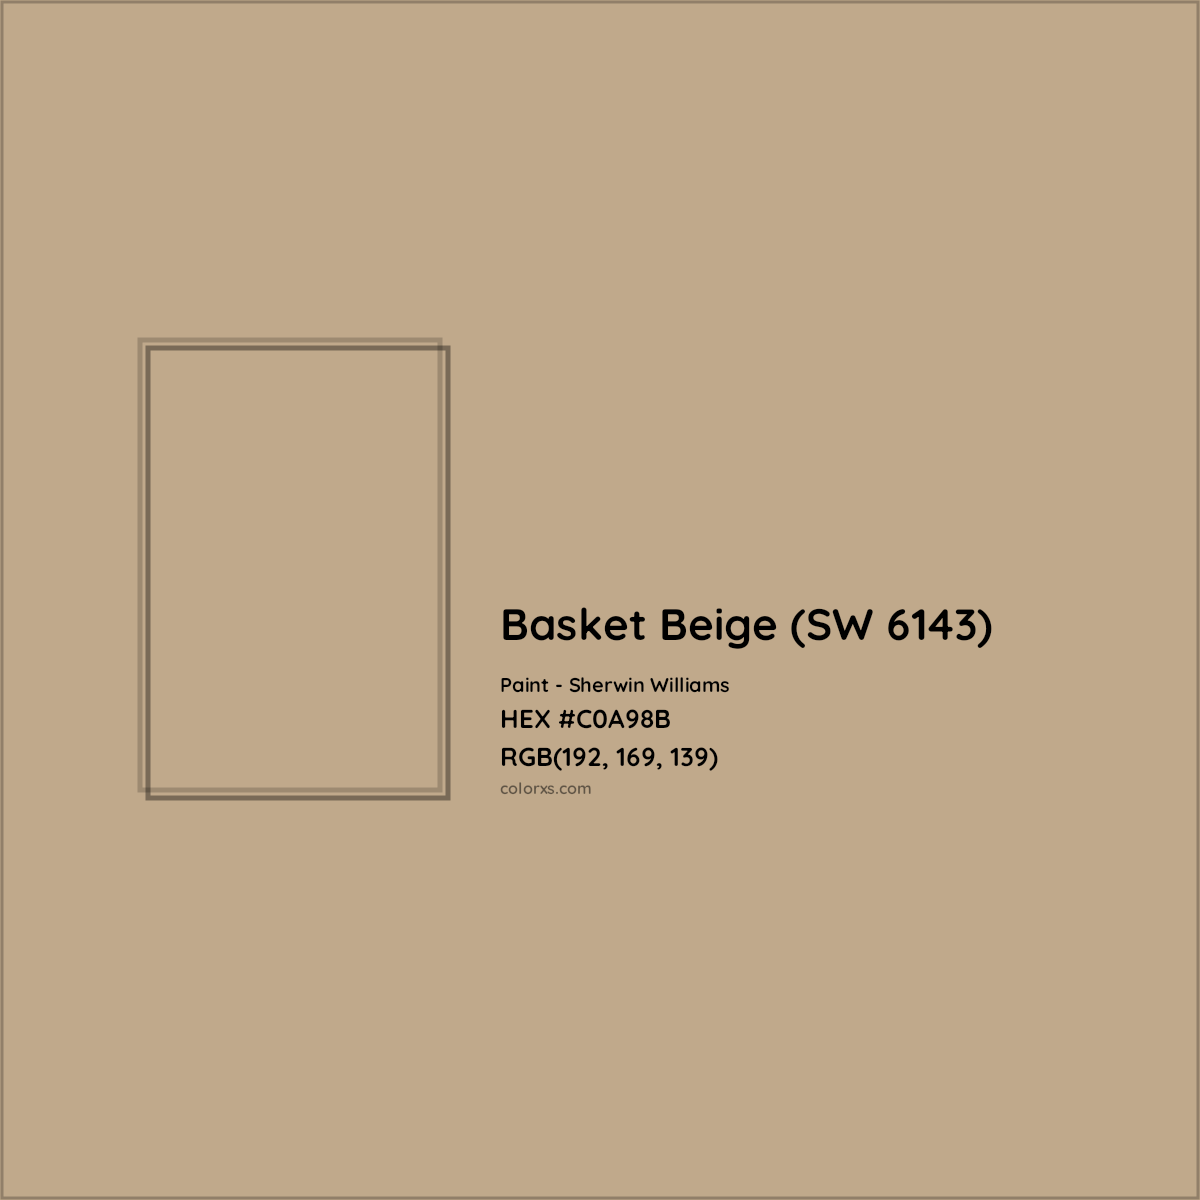 HEX #C0A98B Basket Beige (SW 6143) Paint Sherwin Williams - Color Code